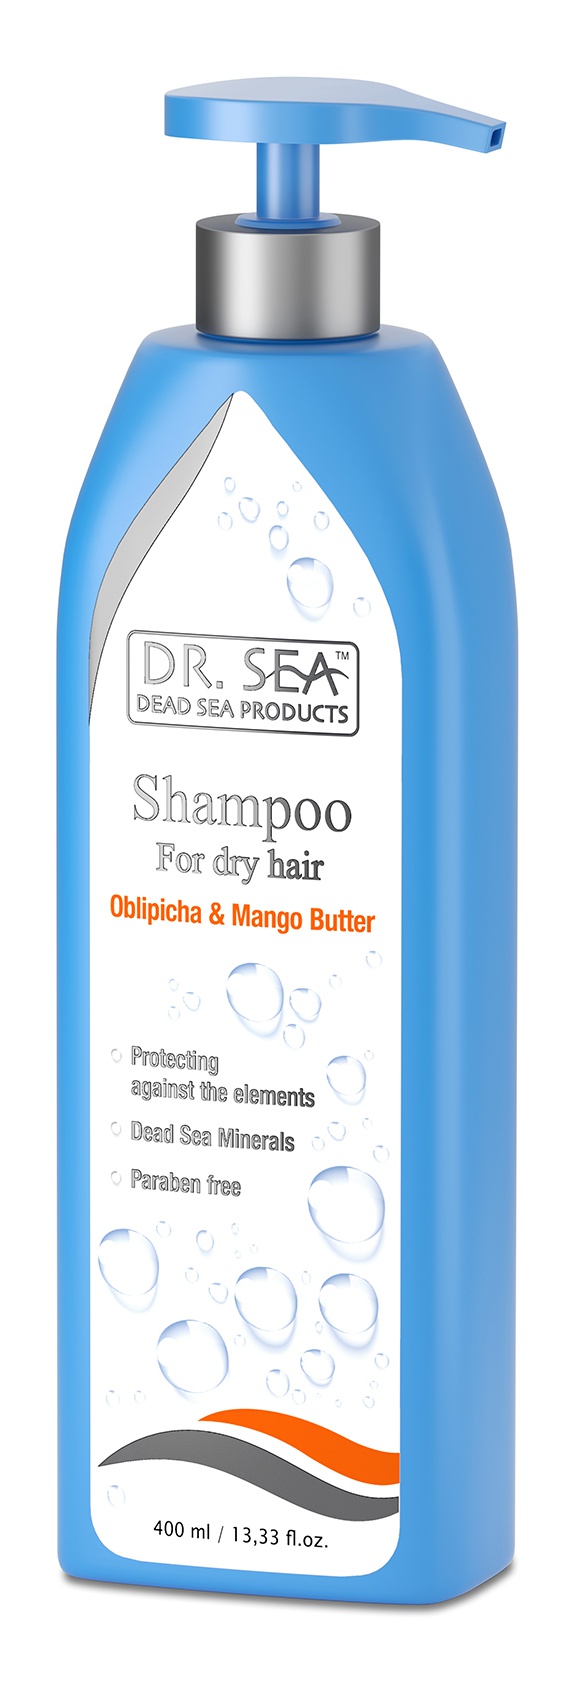 DR. SEA Shampoo Oblipicha & Mango Butter For Dry Hair